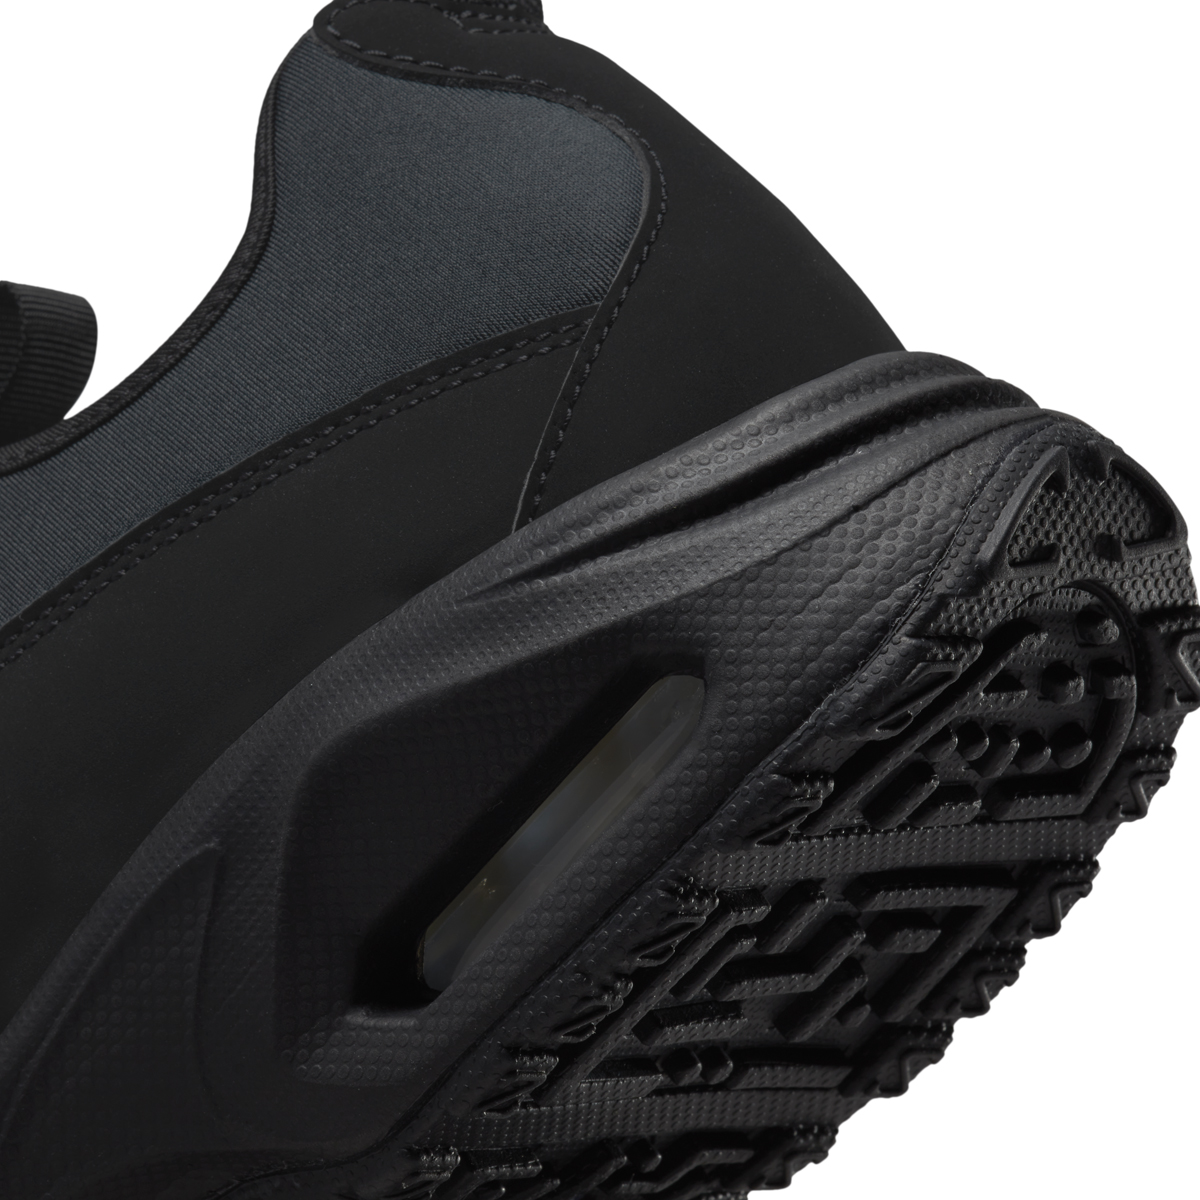 COMME des GARÇONS x Nike Air Max Sunder Collab Release Details